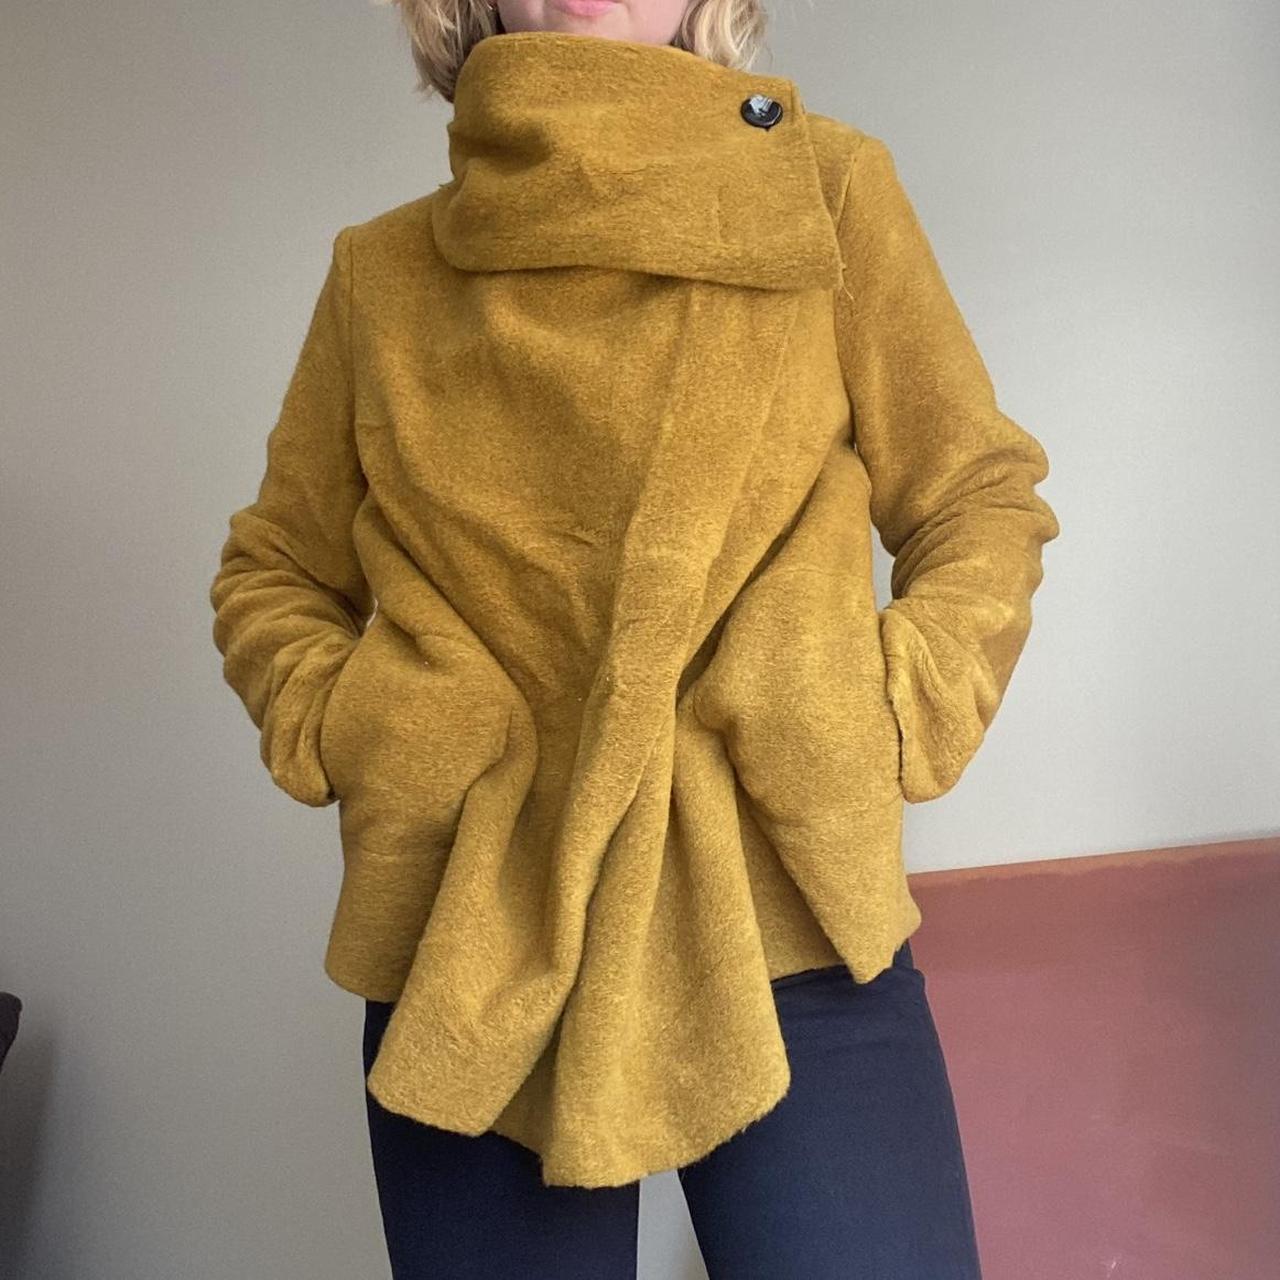 Joe Browns Women's Yellow and Brown Coat